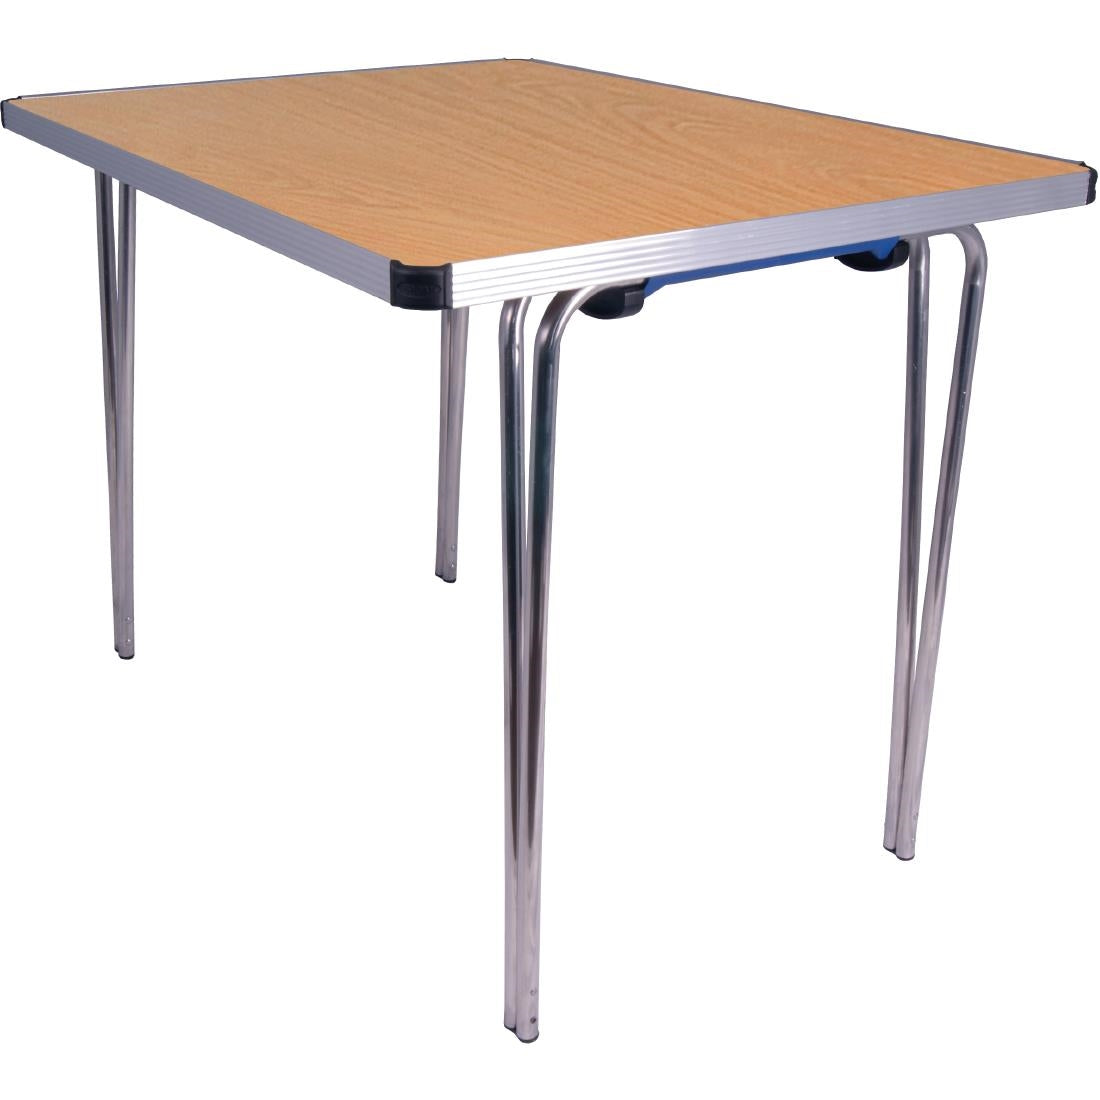 DM611 Gopak Contour Folding Table Oak 3ft JD Catering Equipment Solutions Ltd